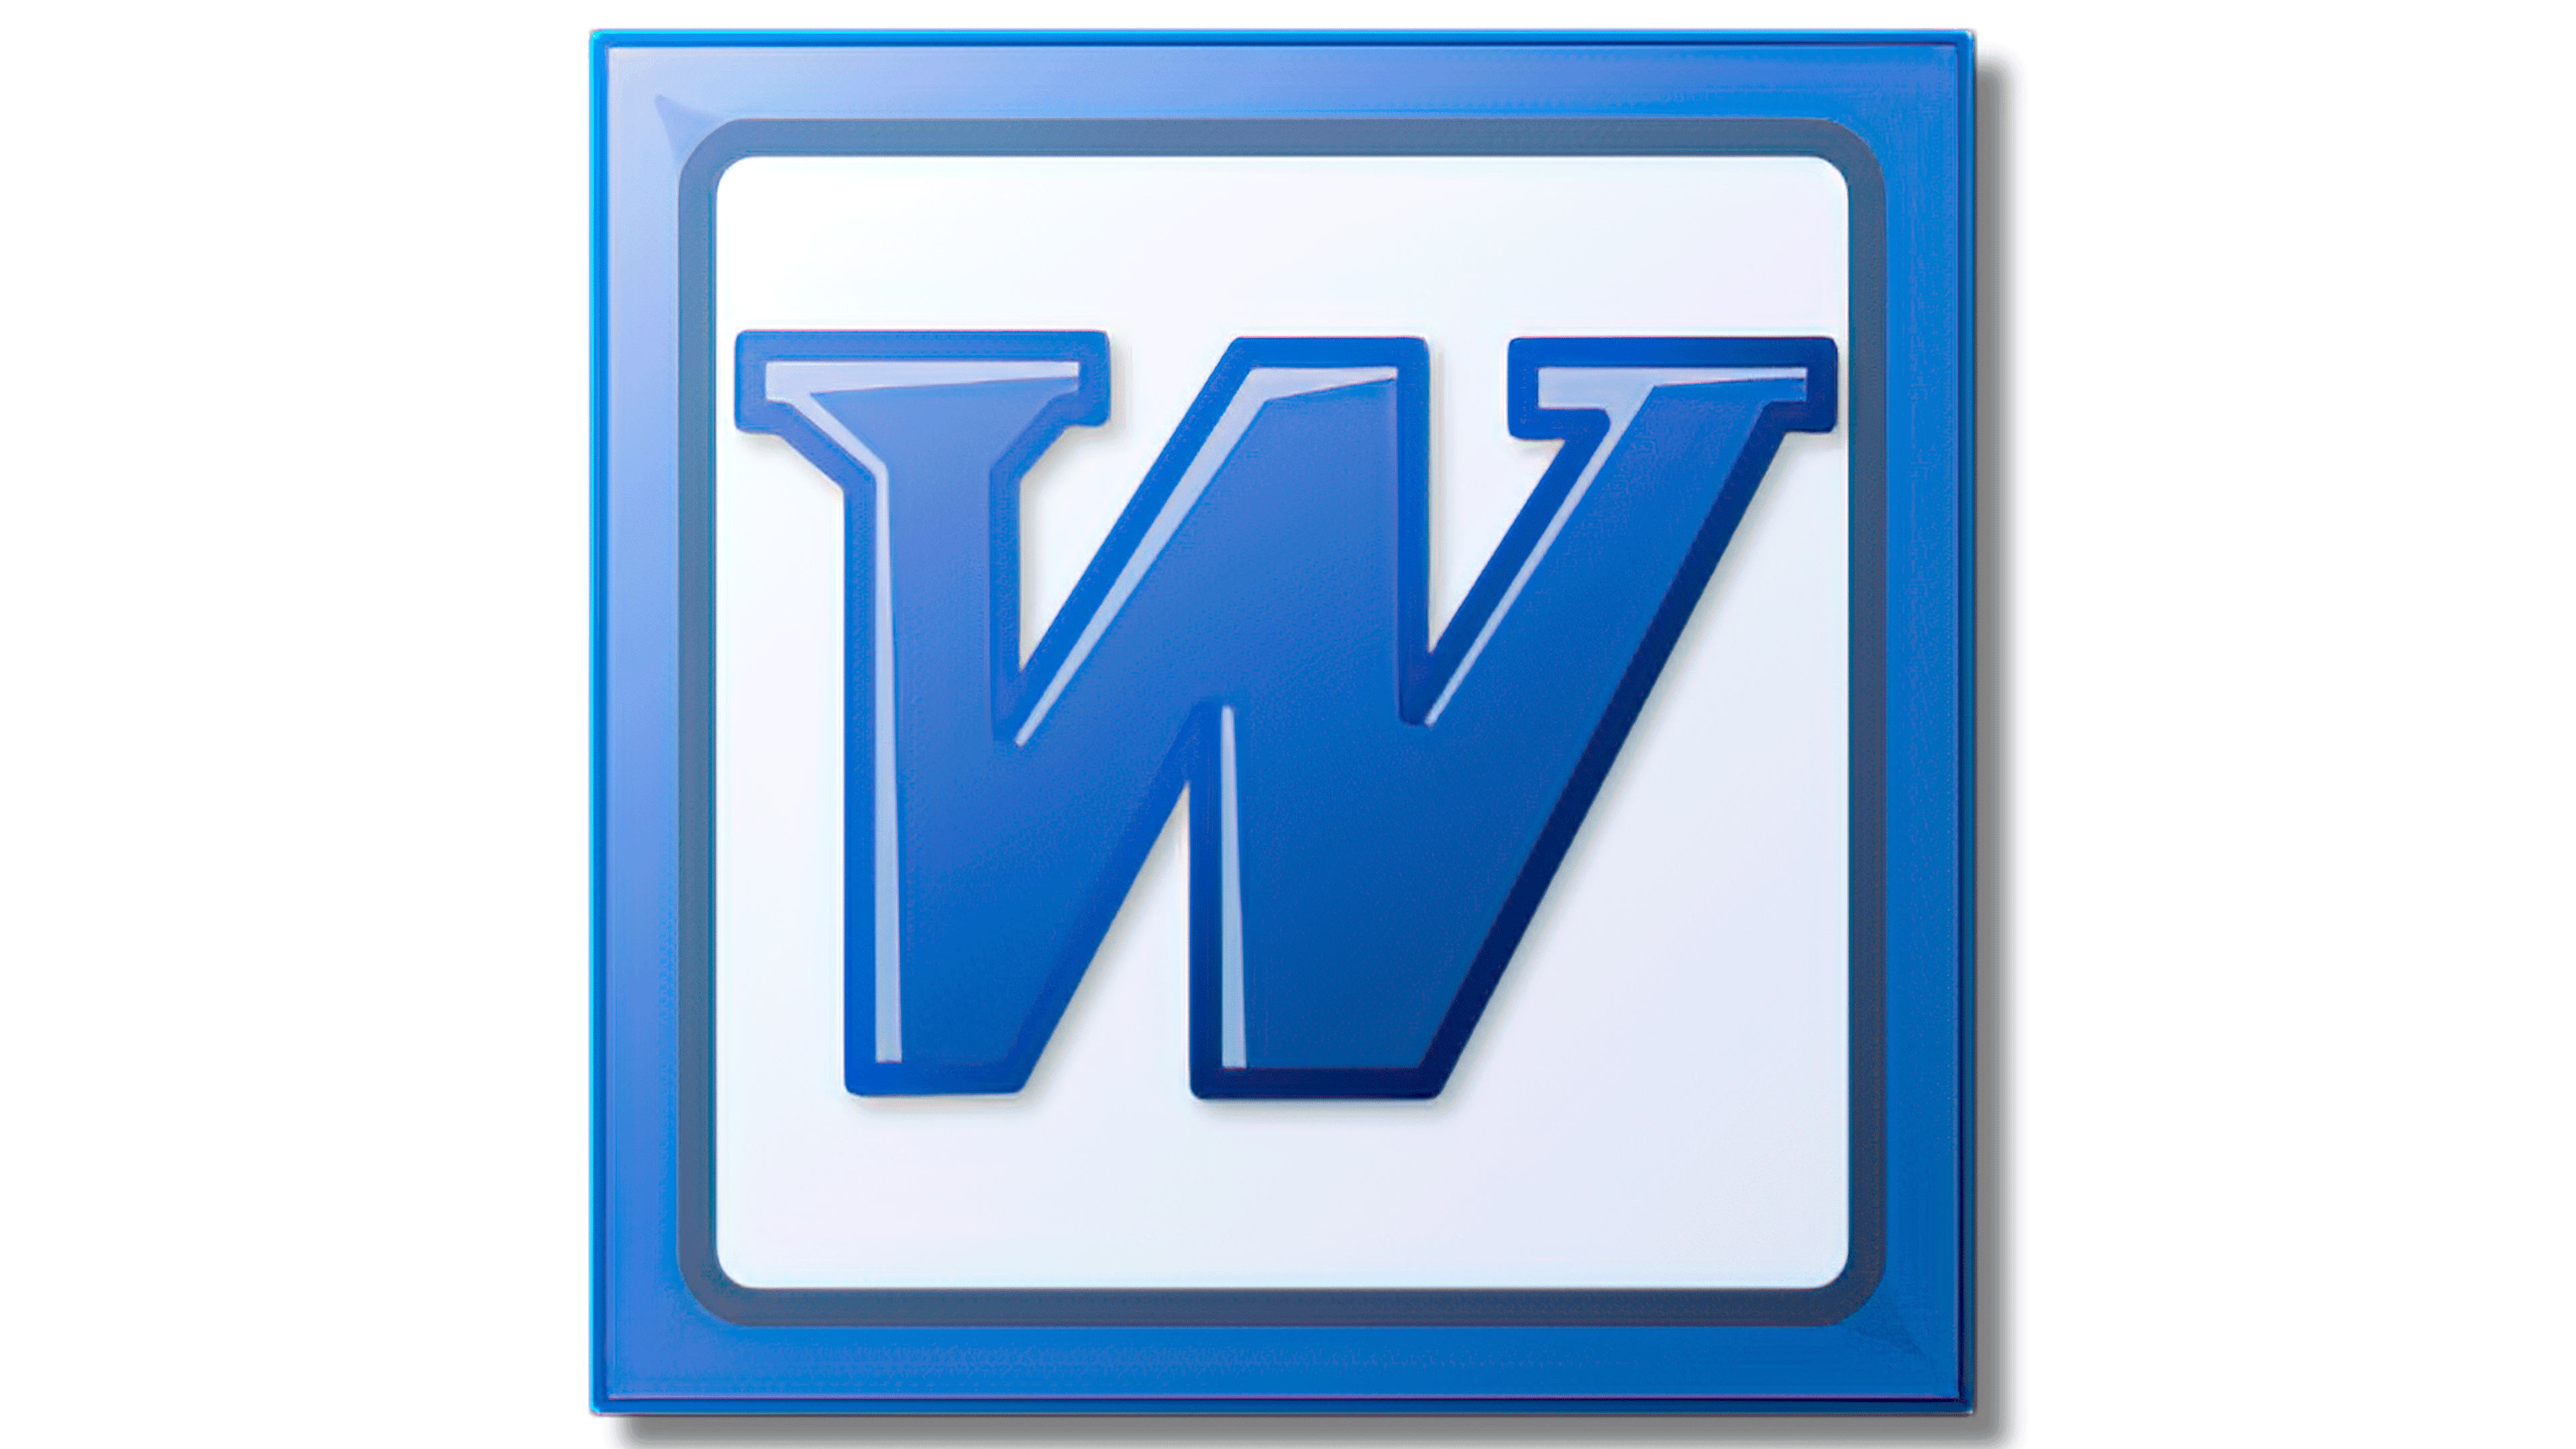 microsoft word logo 2007